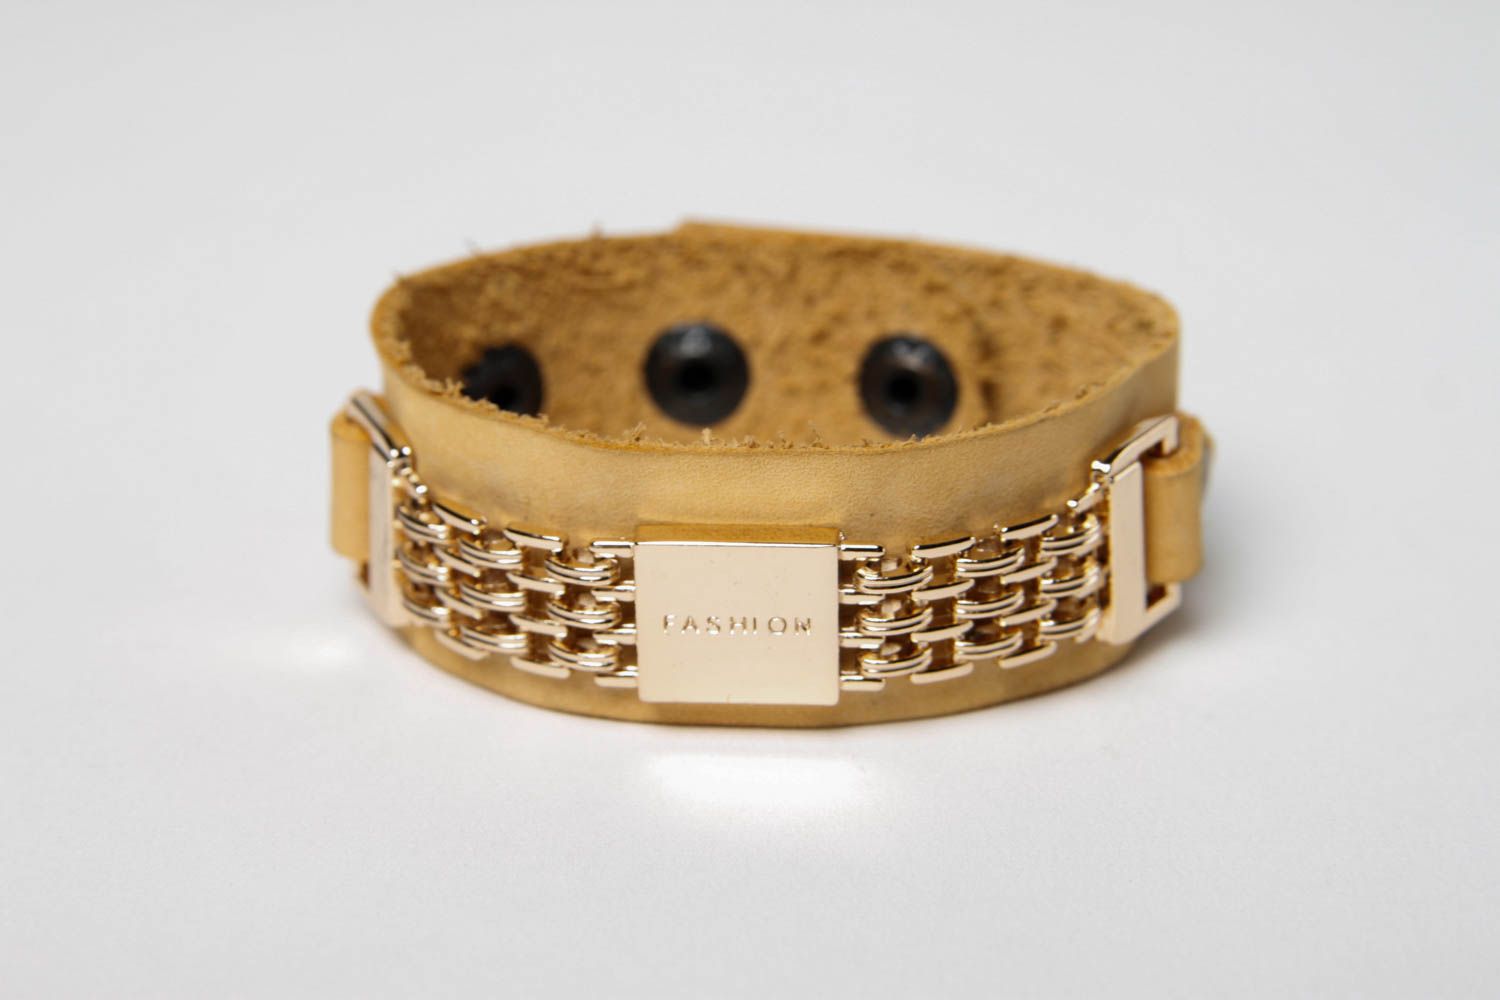 Beautiful handmade wrist bracelet designs leather goods fashion accessories photo 3